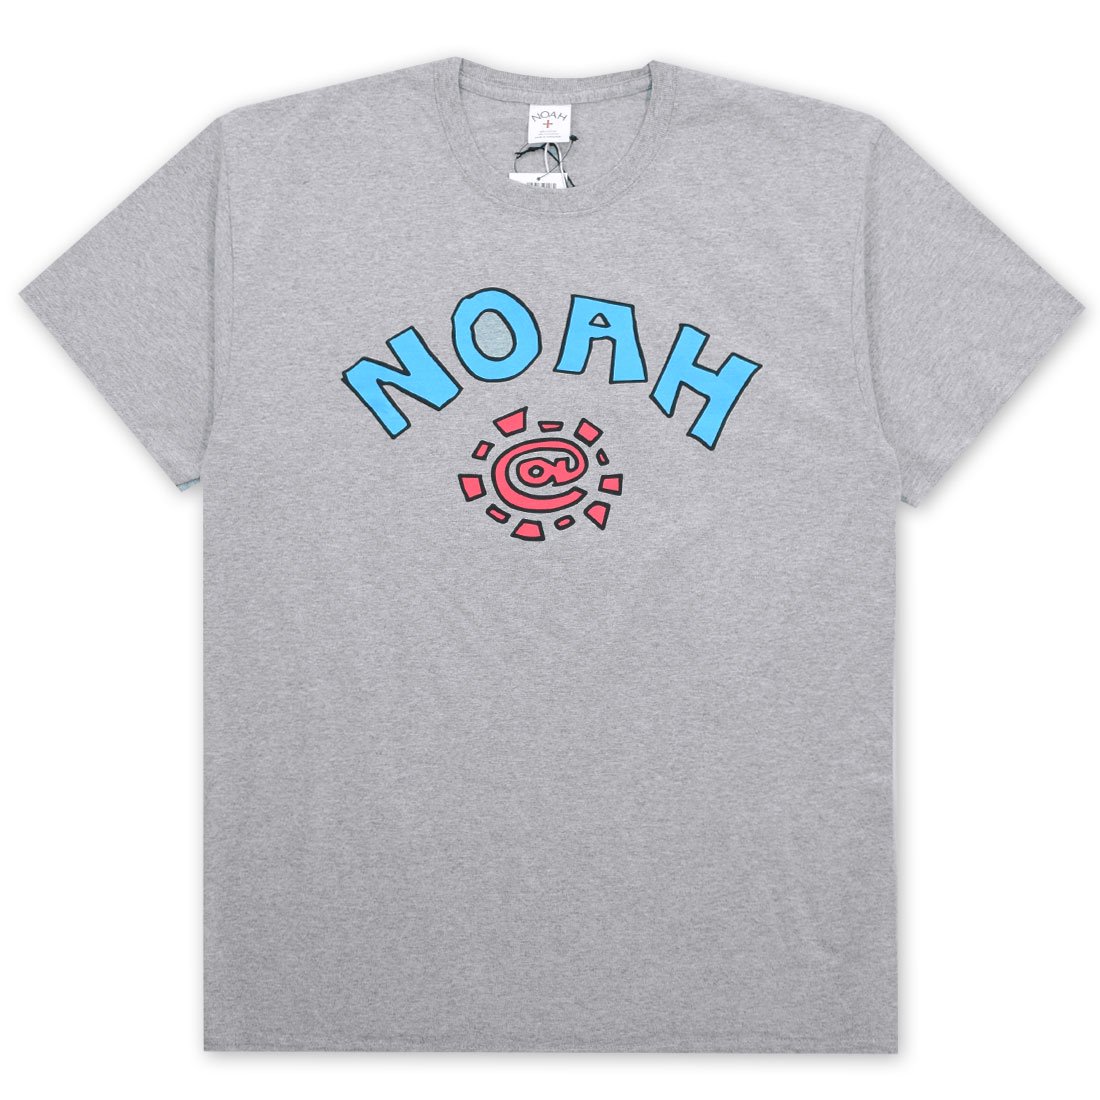 Noah x Always do what you should do Tシャツnoah - Tシャツ 